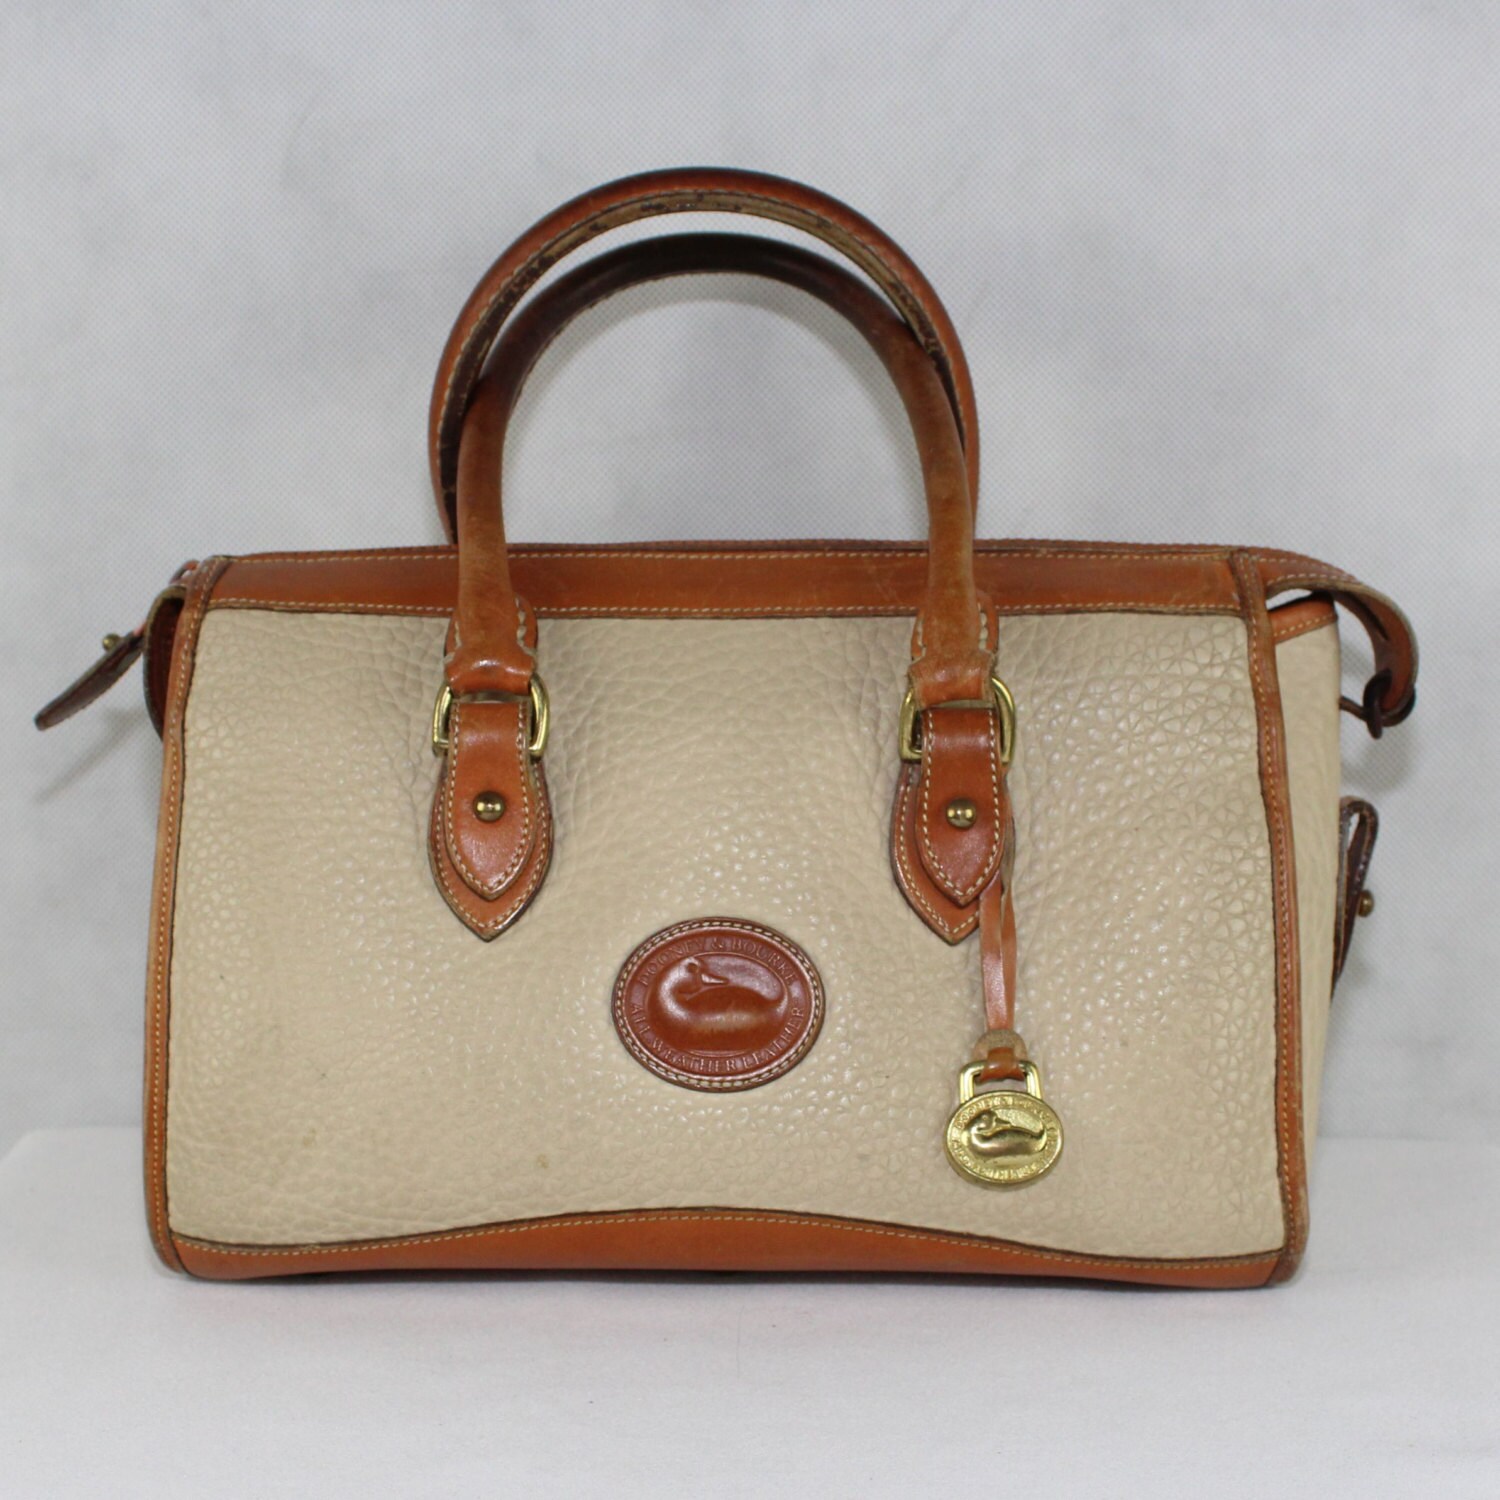 Dooney & Bourke Vintage Classic Satchel Leather by vintaya on Etsy